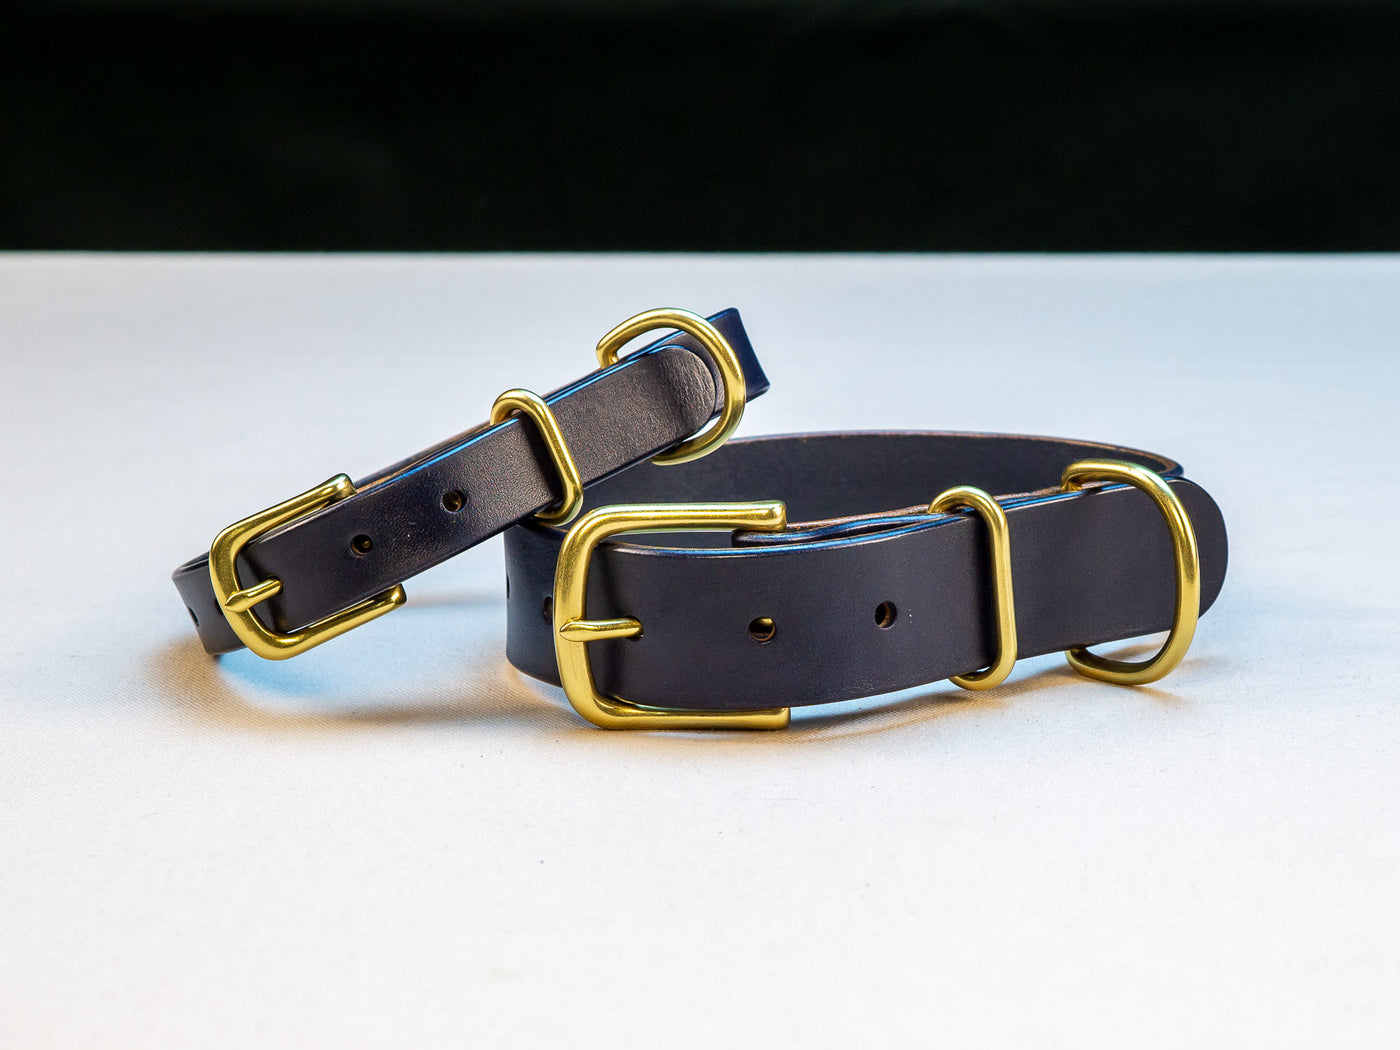 Leather Belt Dog Collar - Navy Blue English Bridle Leather - Atlas Leathercraft - Handmade Australian Leather Goods